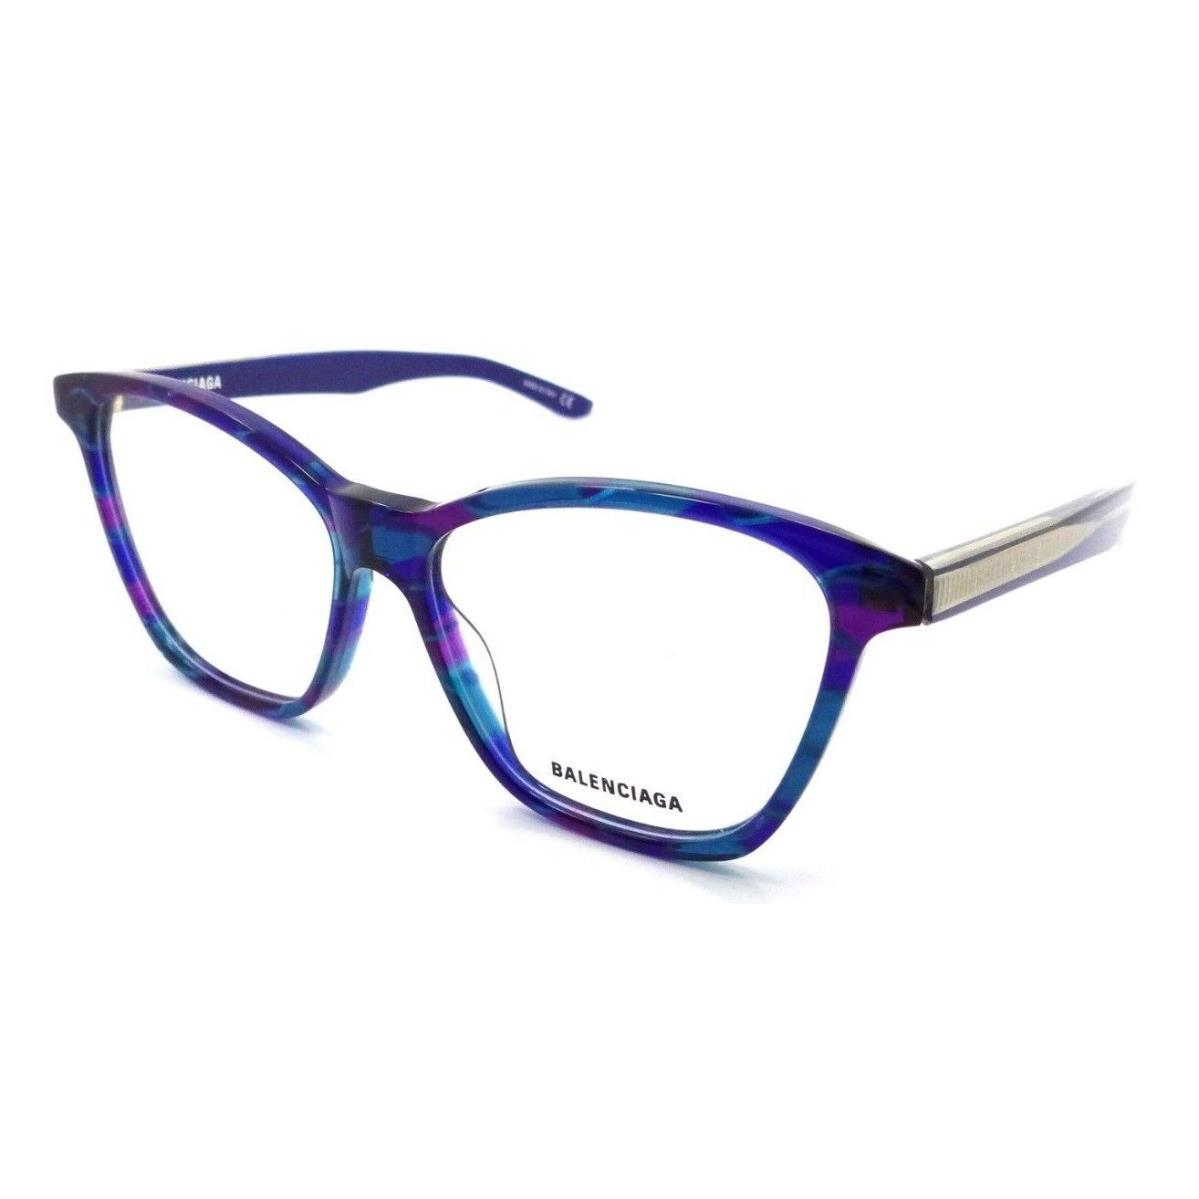 Balenciaga Eyeglasses Frames BB0029O 004 54-15-140 Multicolor Light Blue Transp - Frame: